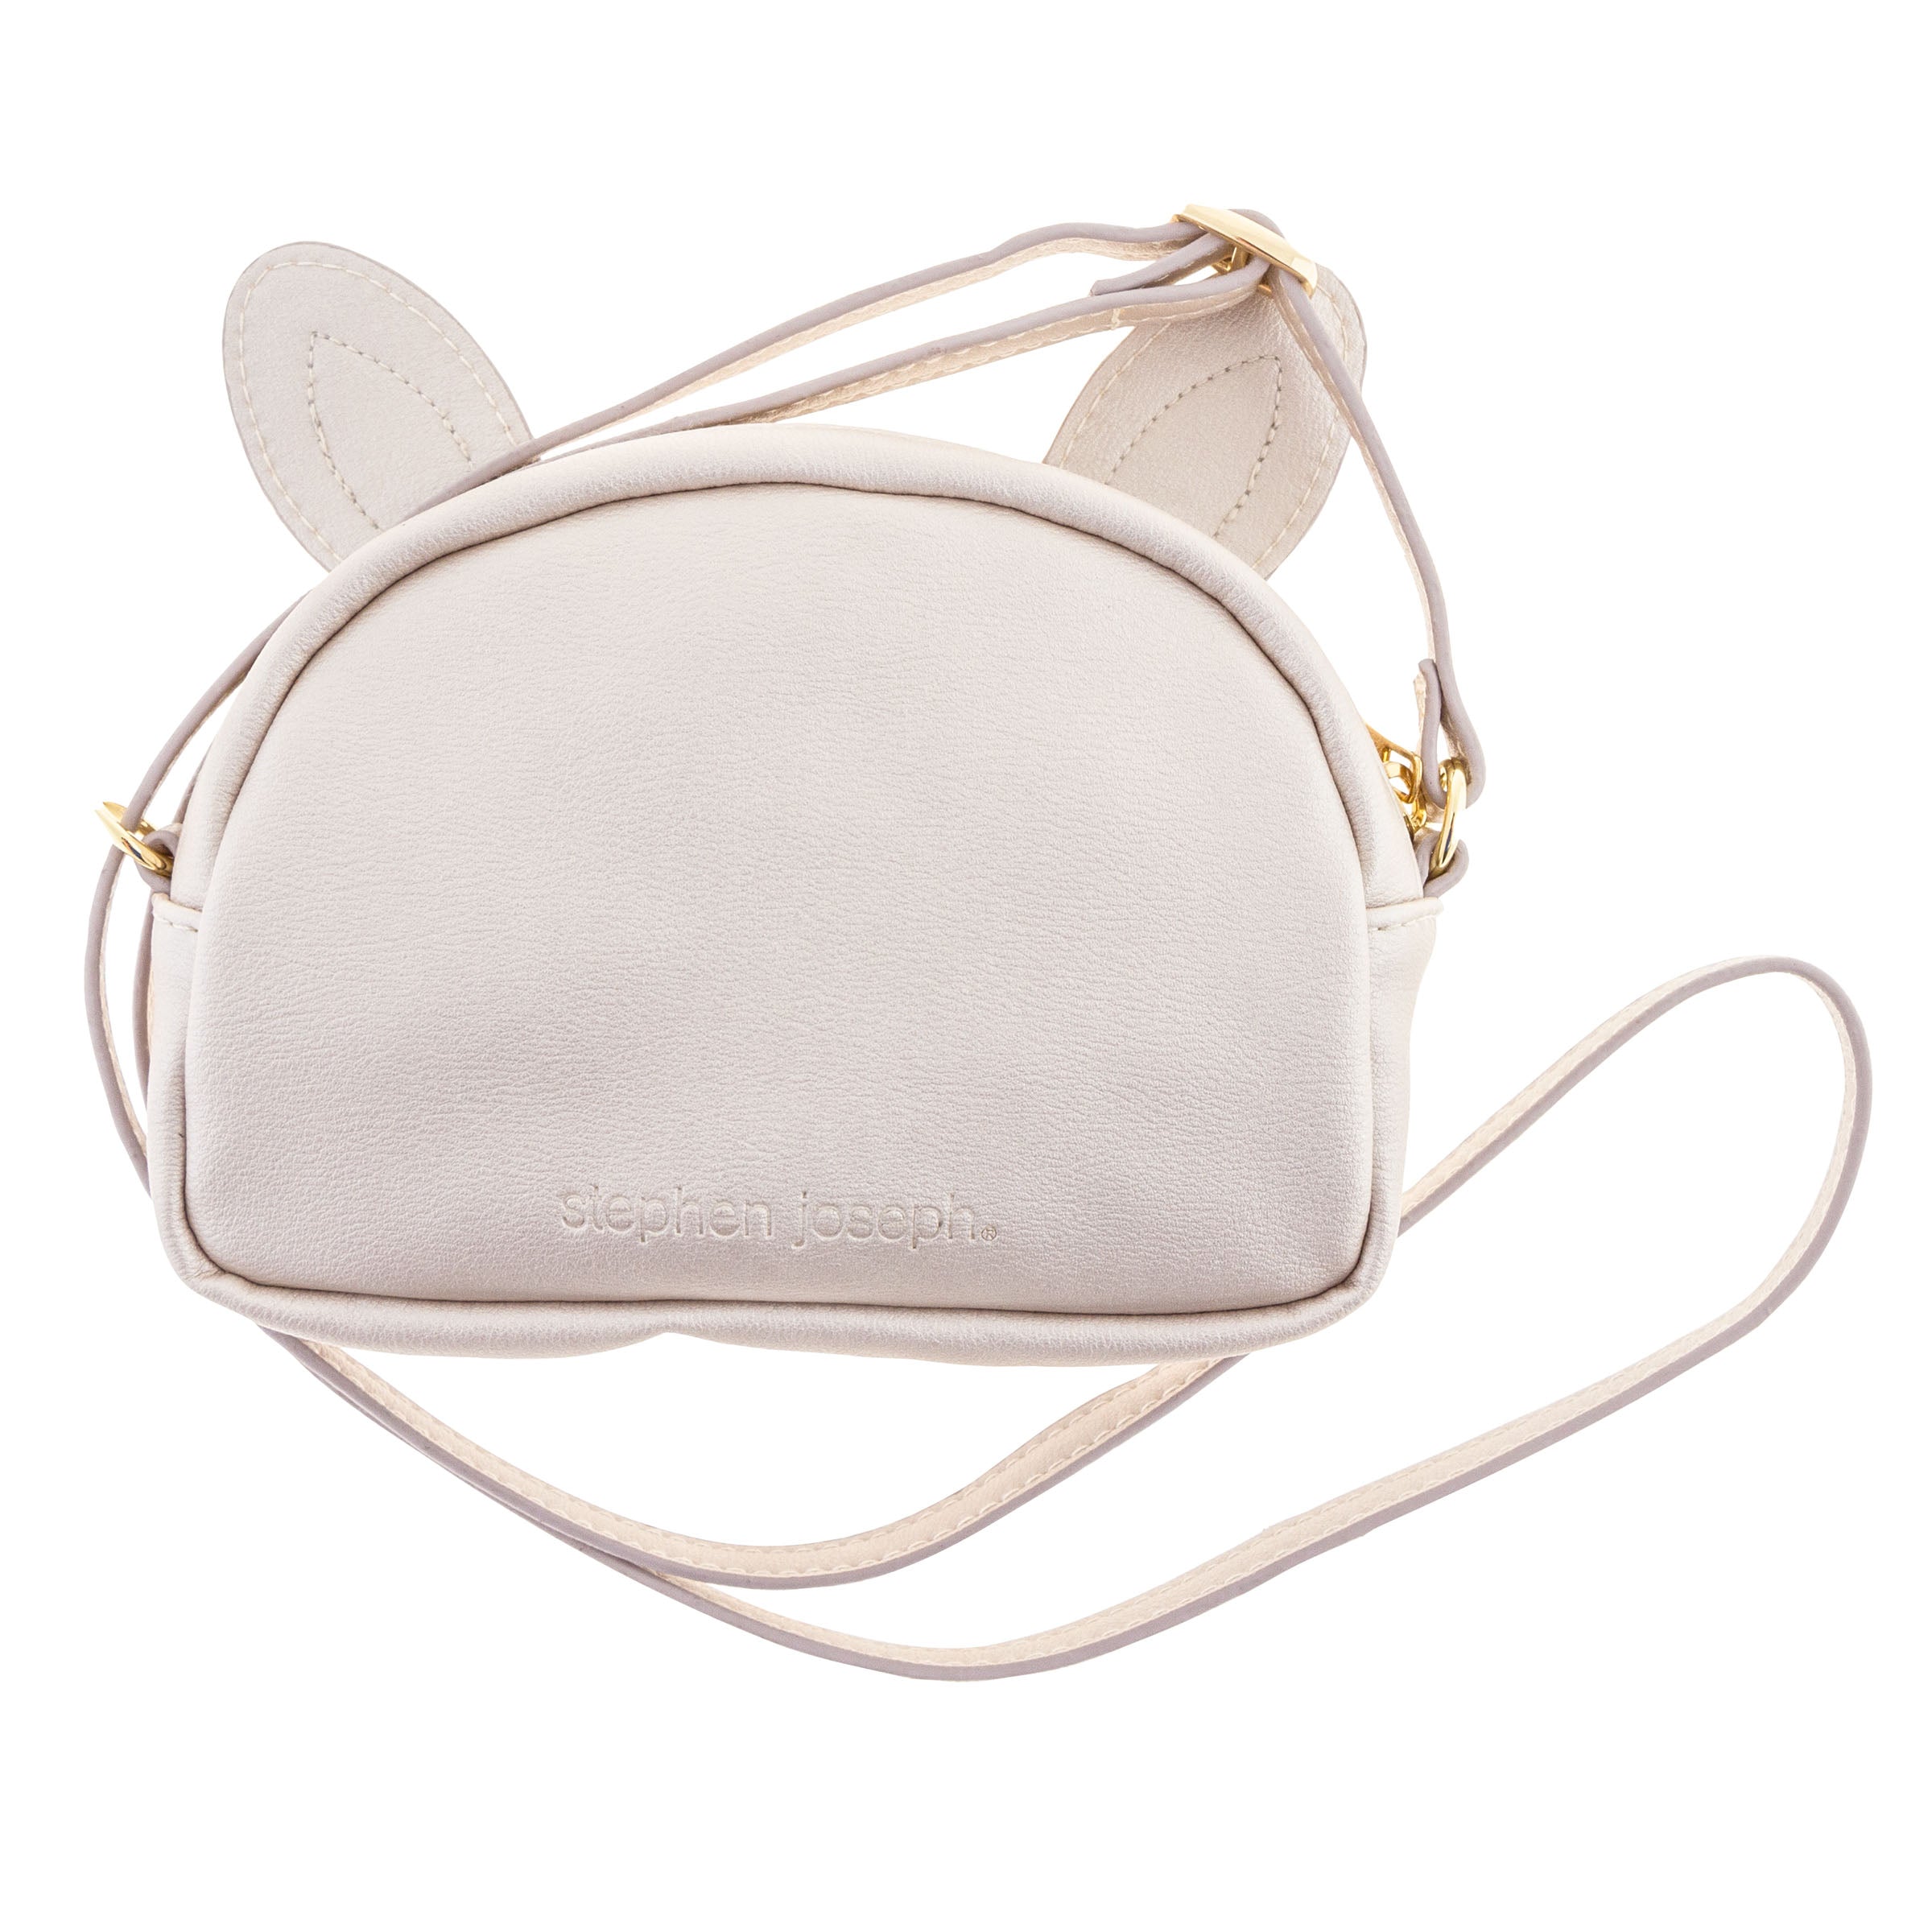 Stylish handbag with ballet motif and embellishments on Craiyon